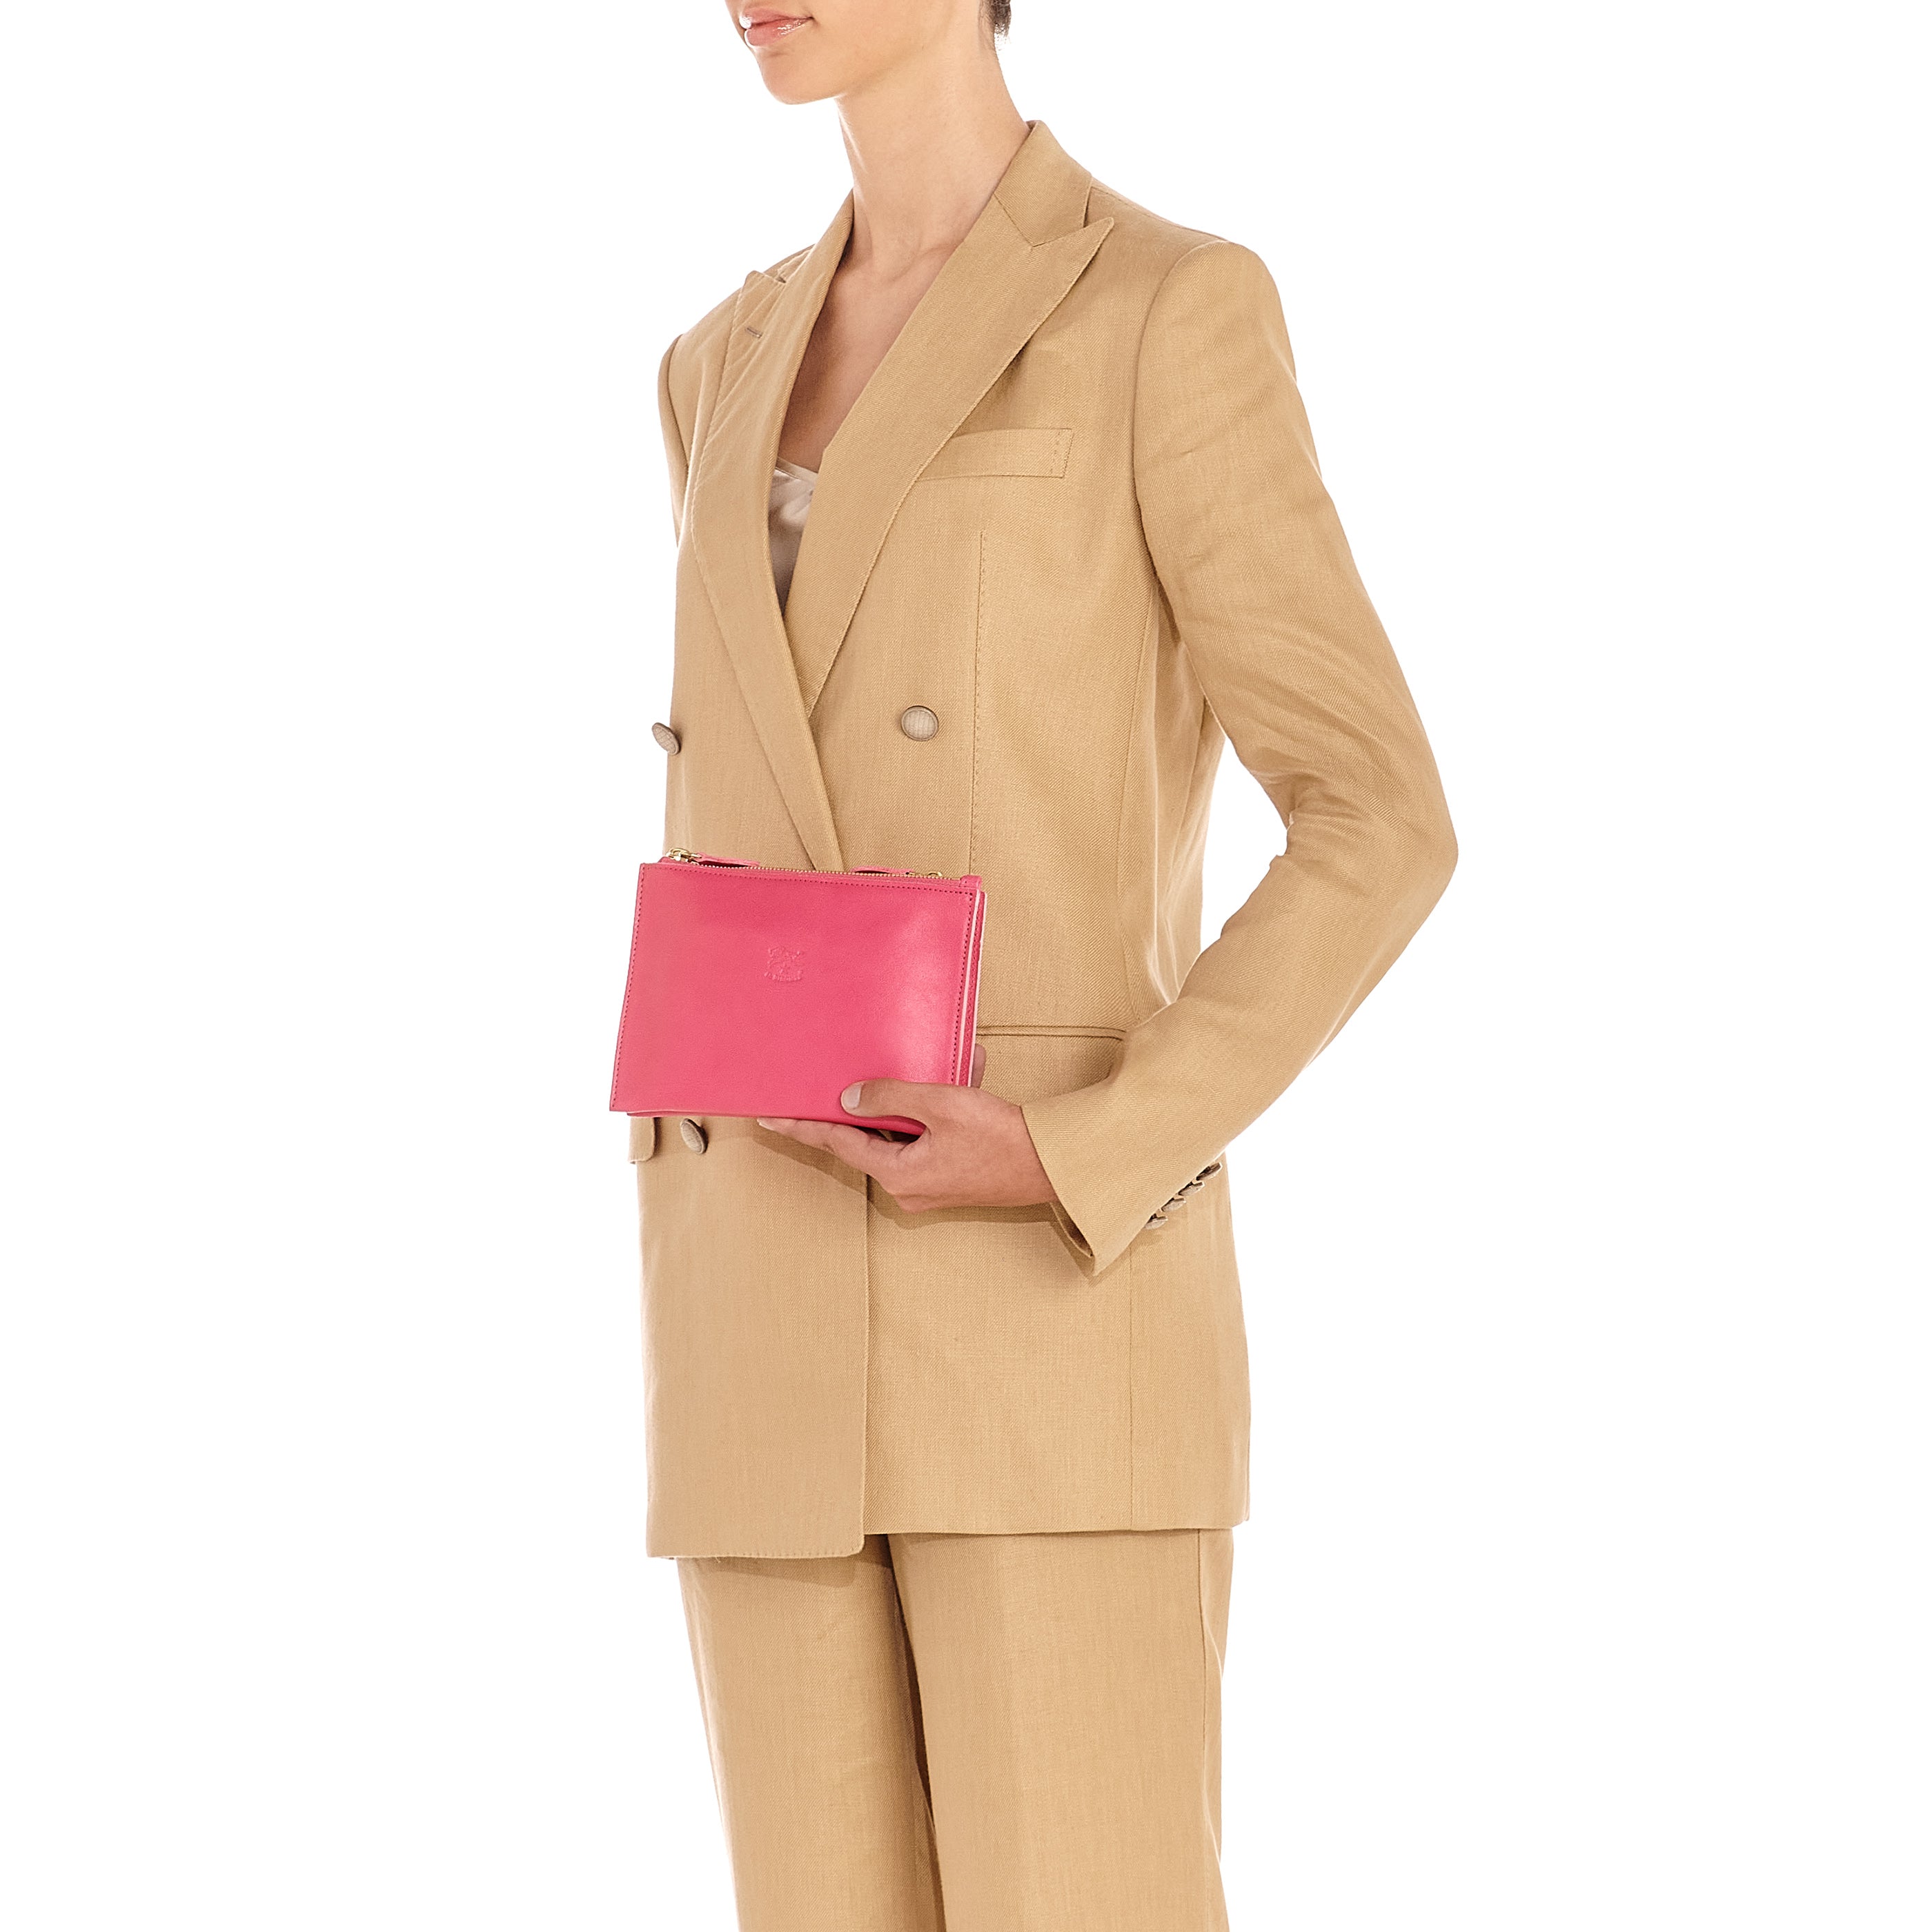 Talamone | Women's clutch bag in leather color azalea